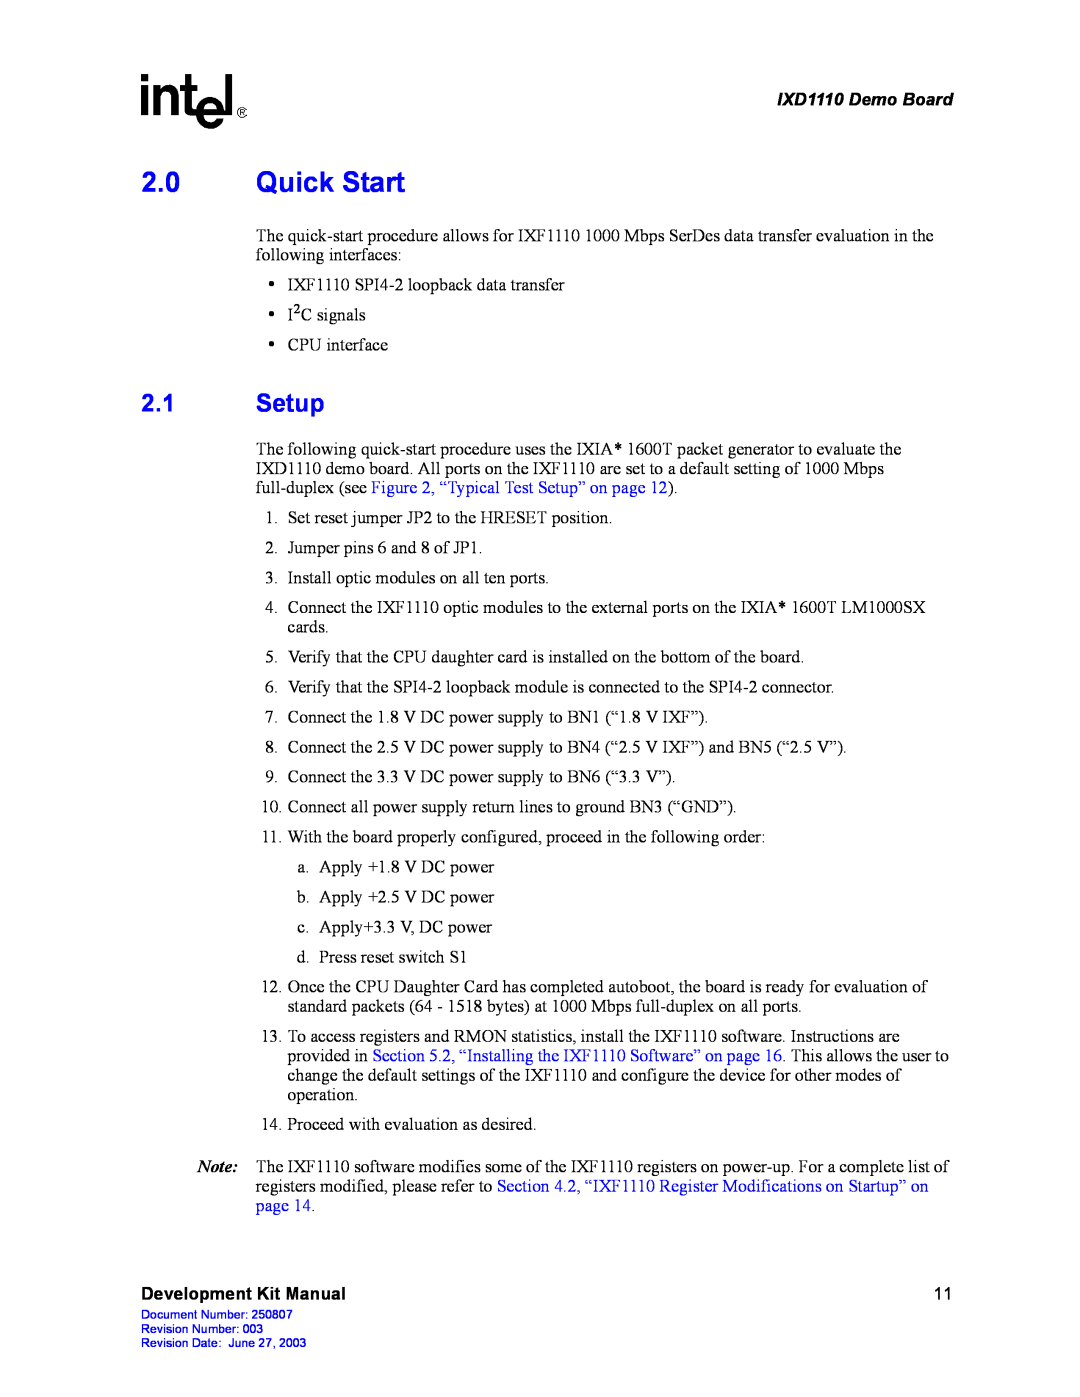 Intel manual Quick Start, Setup, IXD1110 Demo Board, Development Kit Manual 